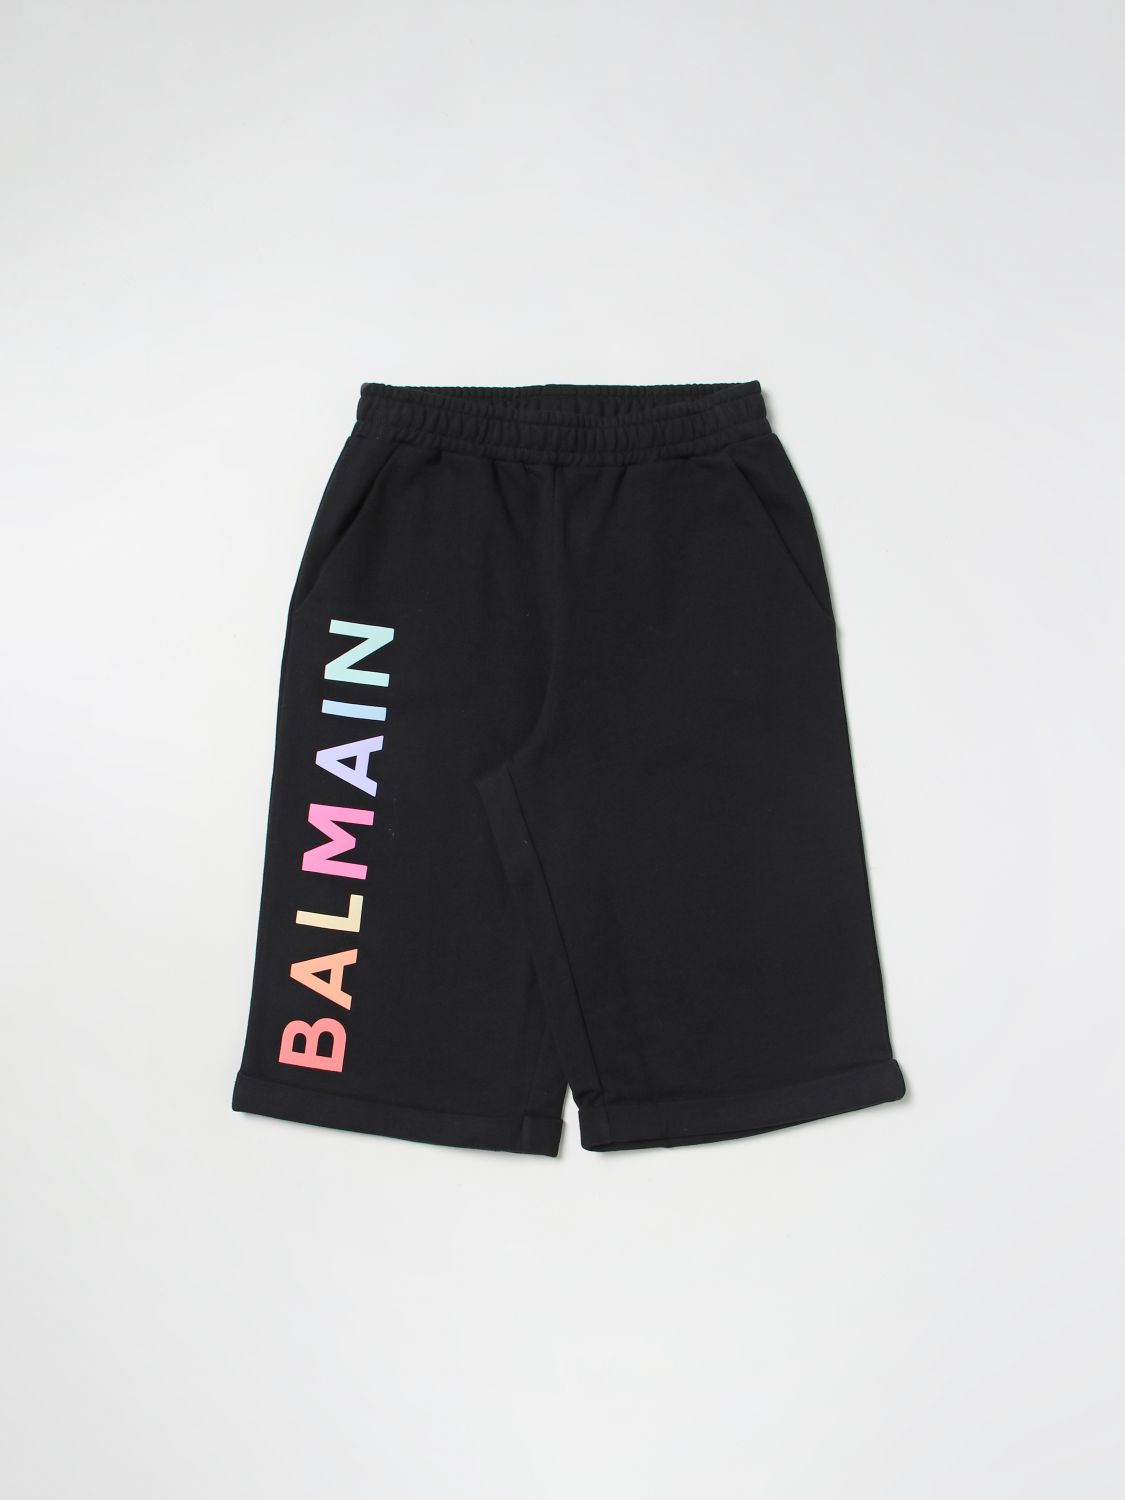 Balmain Shorts  Kids Kids Color Black